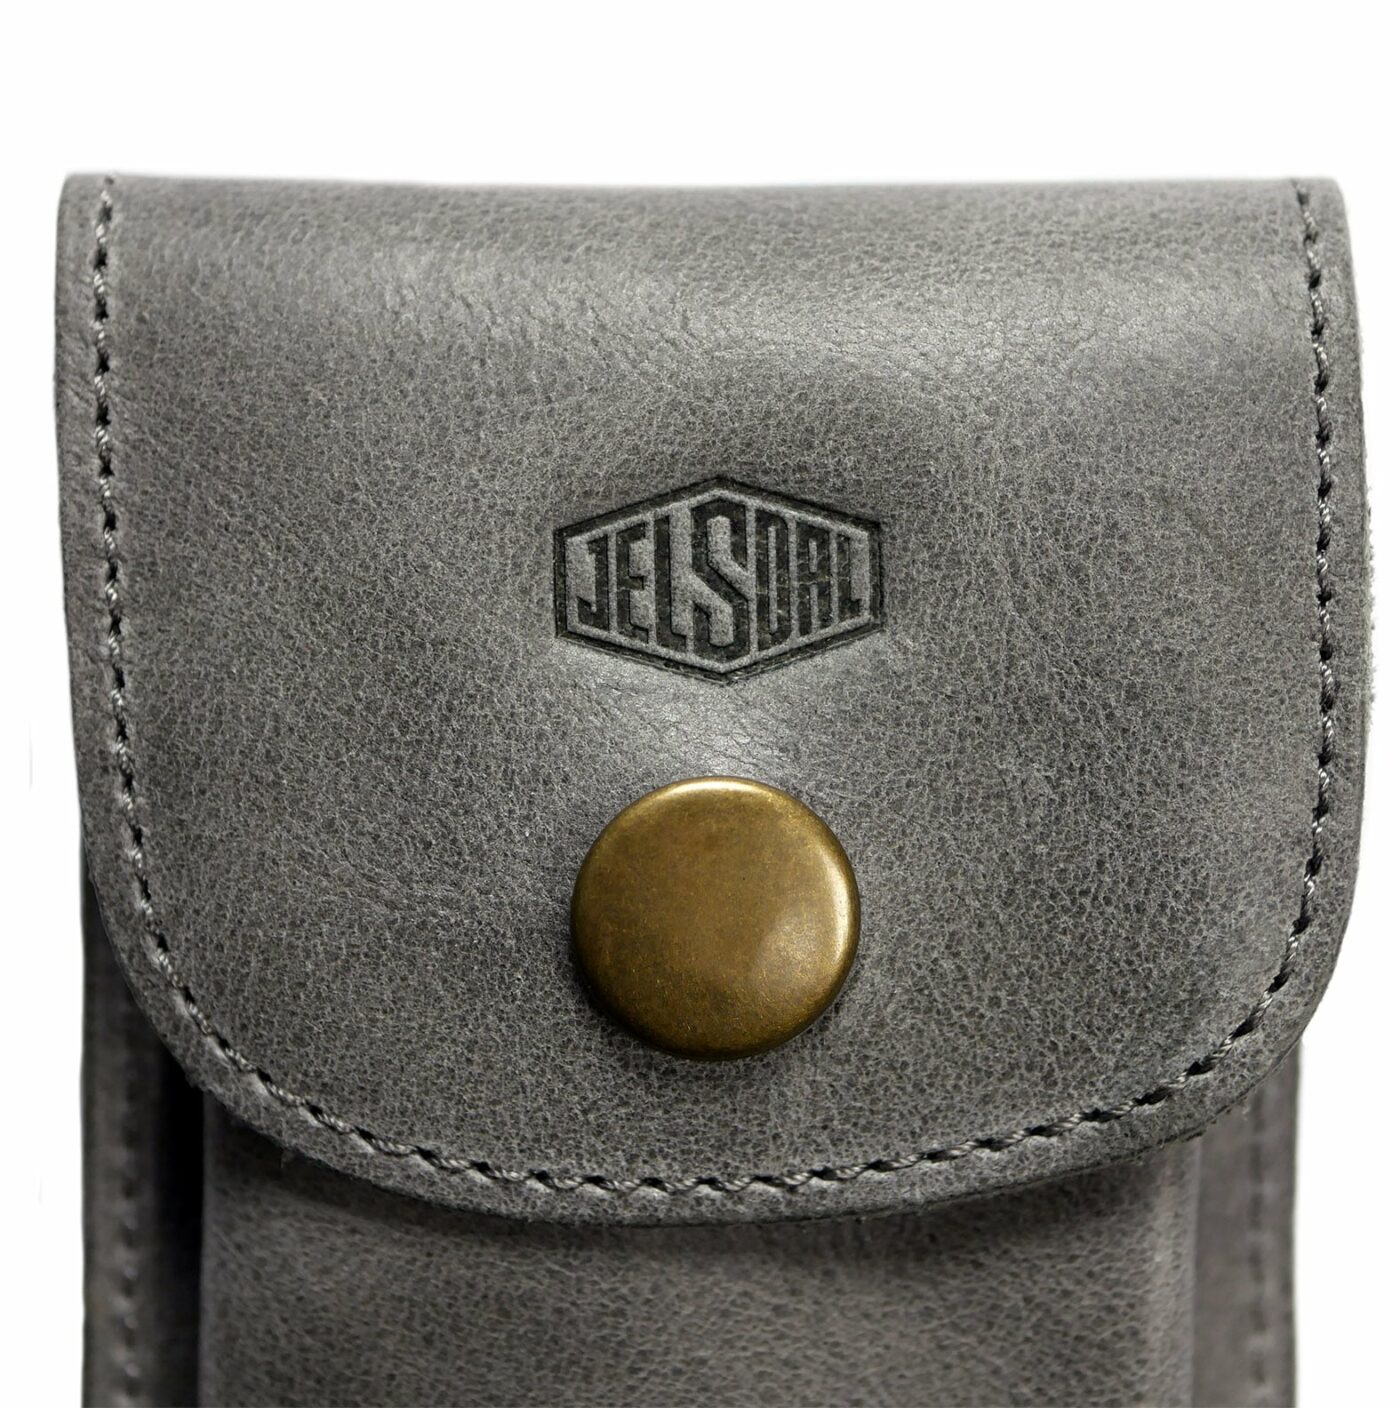 Jelsdal-Leather-Watch-Pouch-Gray-detail-min